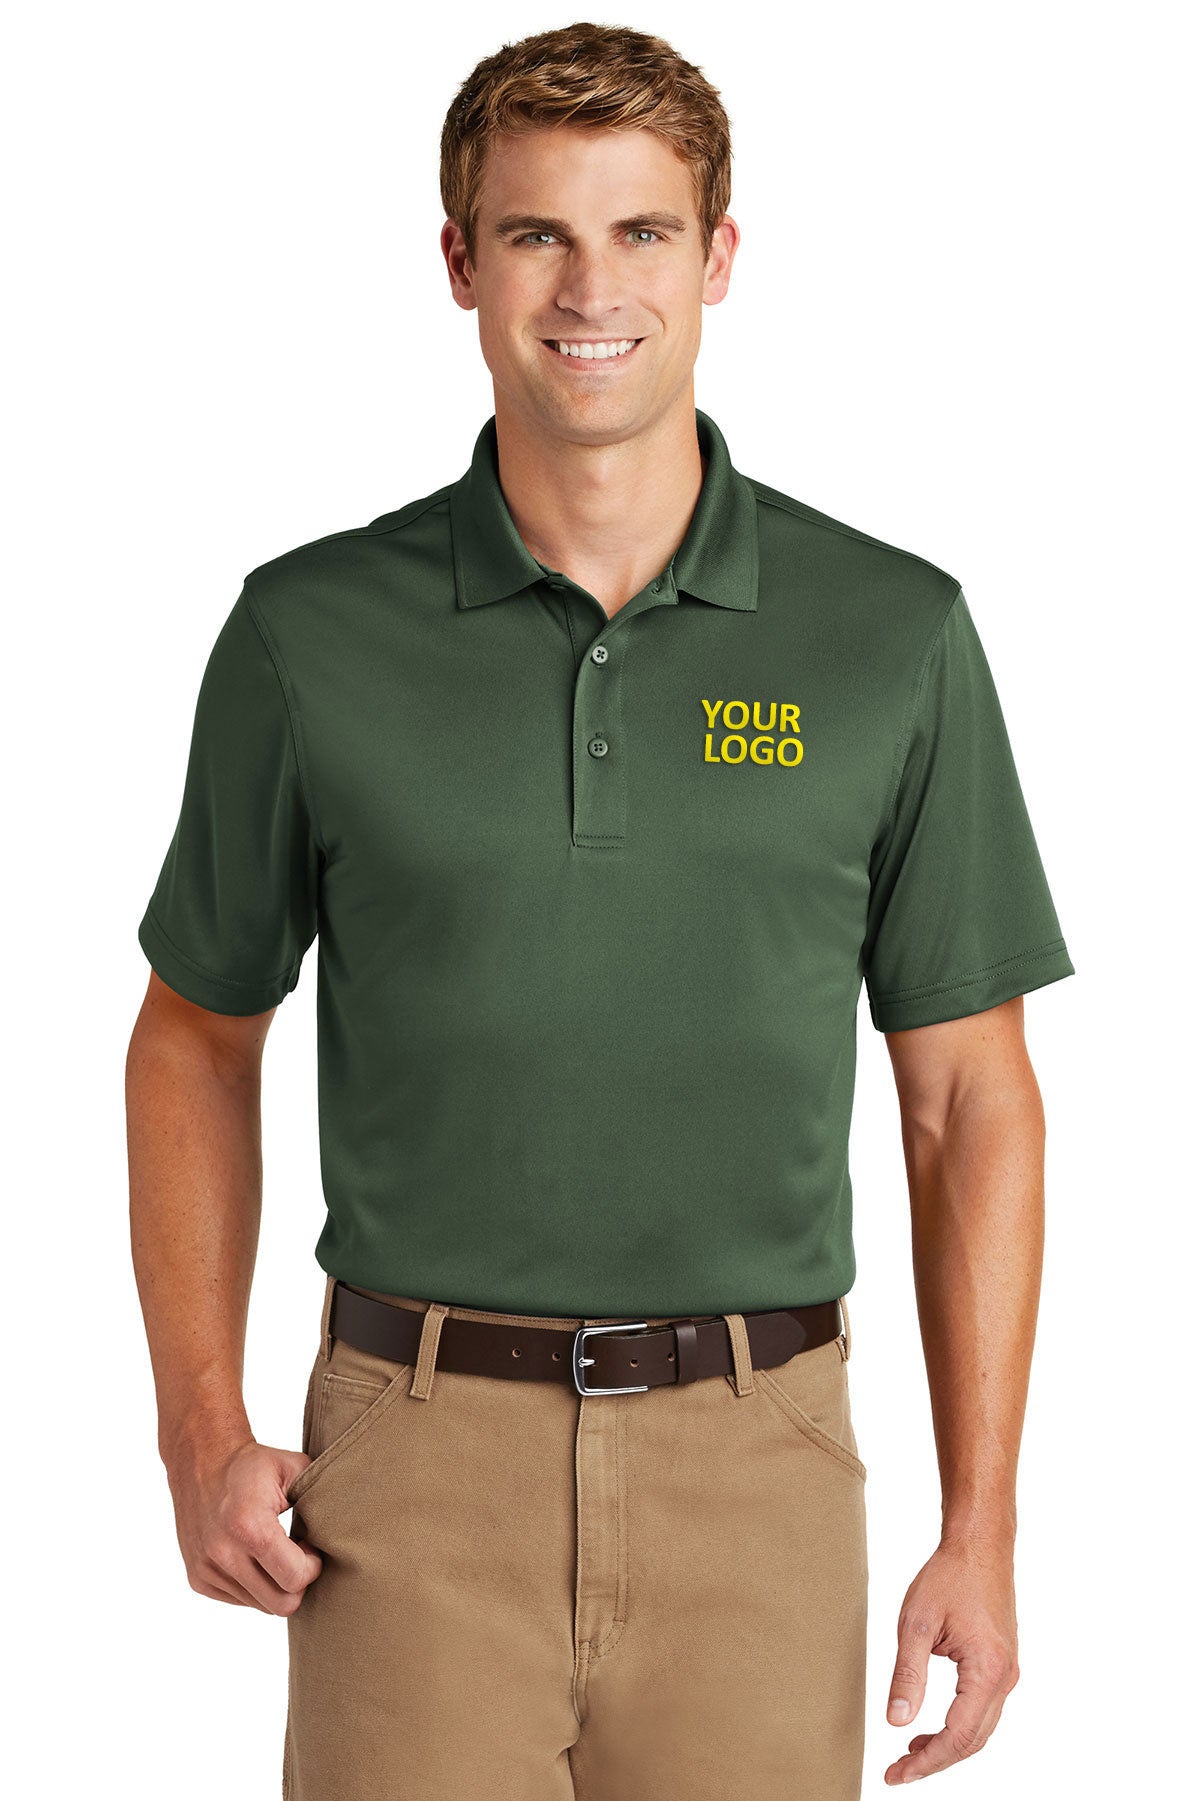 CornerStone Dark Green CS412 company polo shirts embroidered